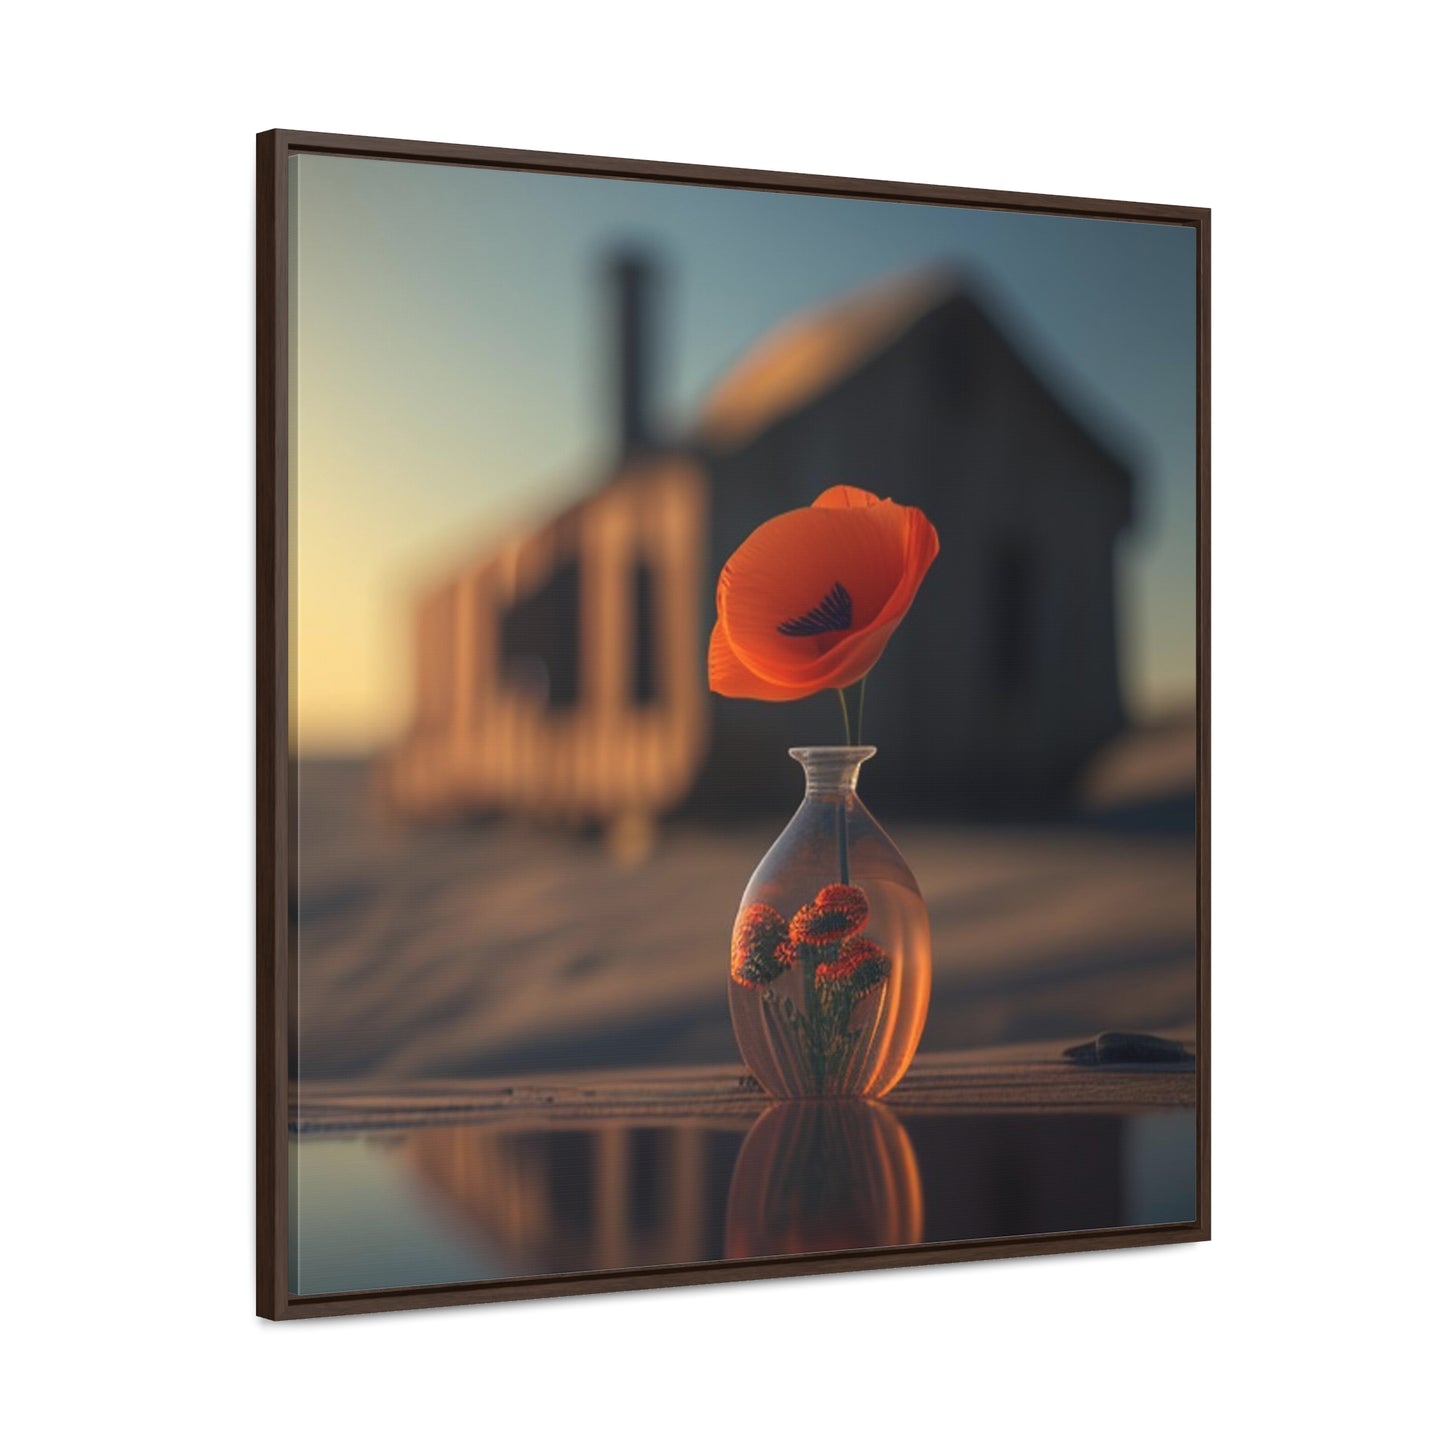 Gallery Canvas Wraps, Square Frame Orange Poppy in a Vase 3